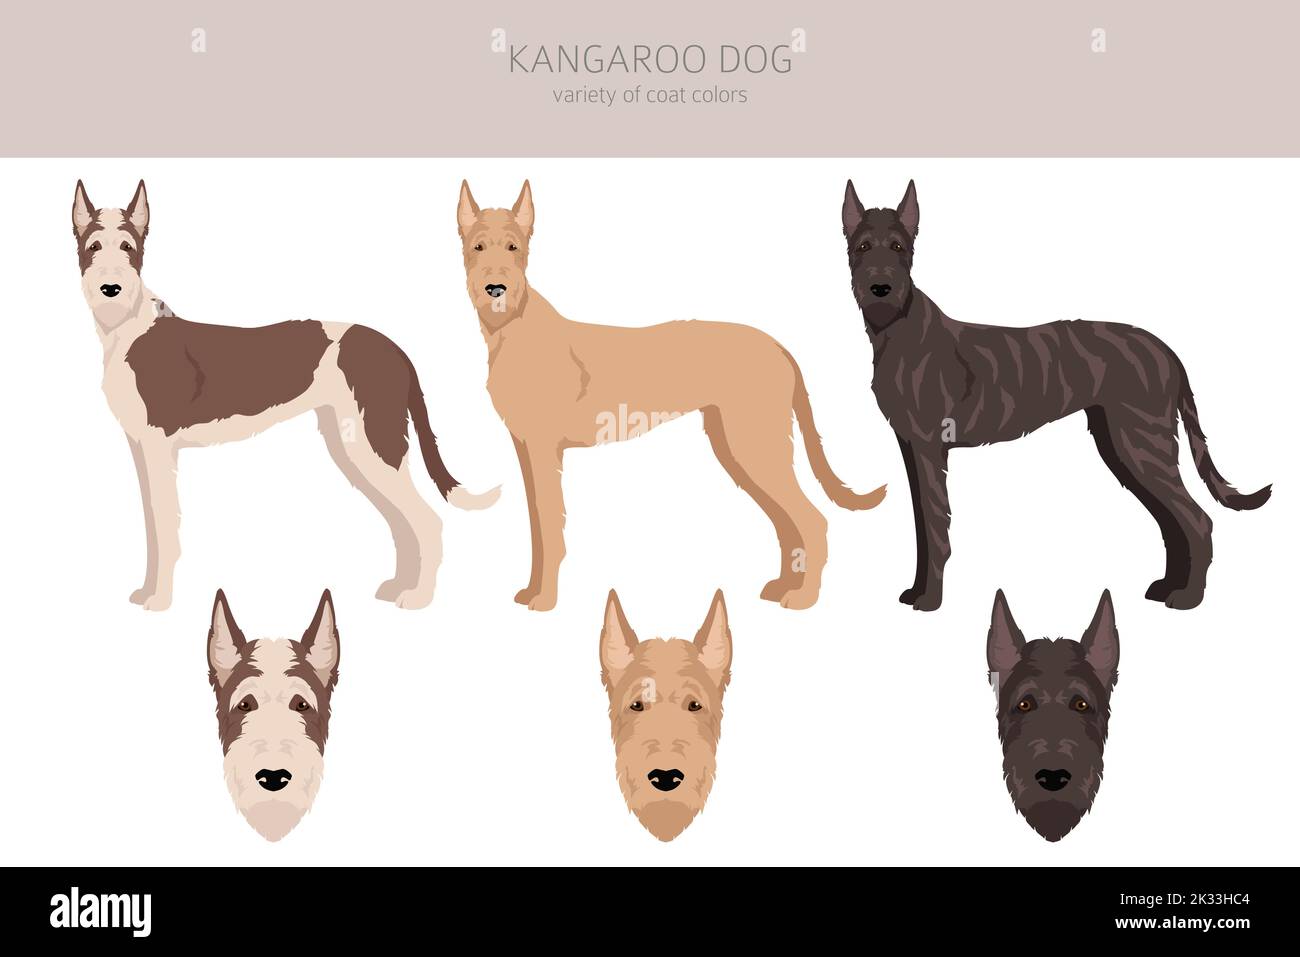 Kangaroo dog clipart. Different coat colors set.  Vector illustration Stock Vector